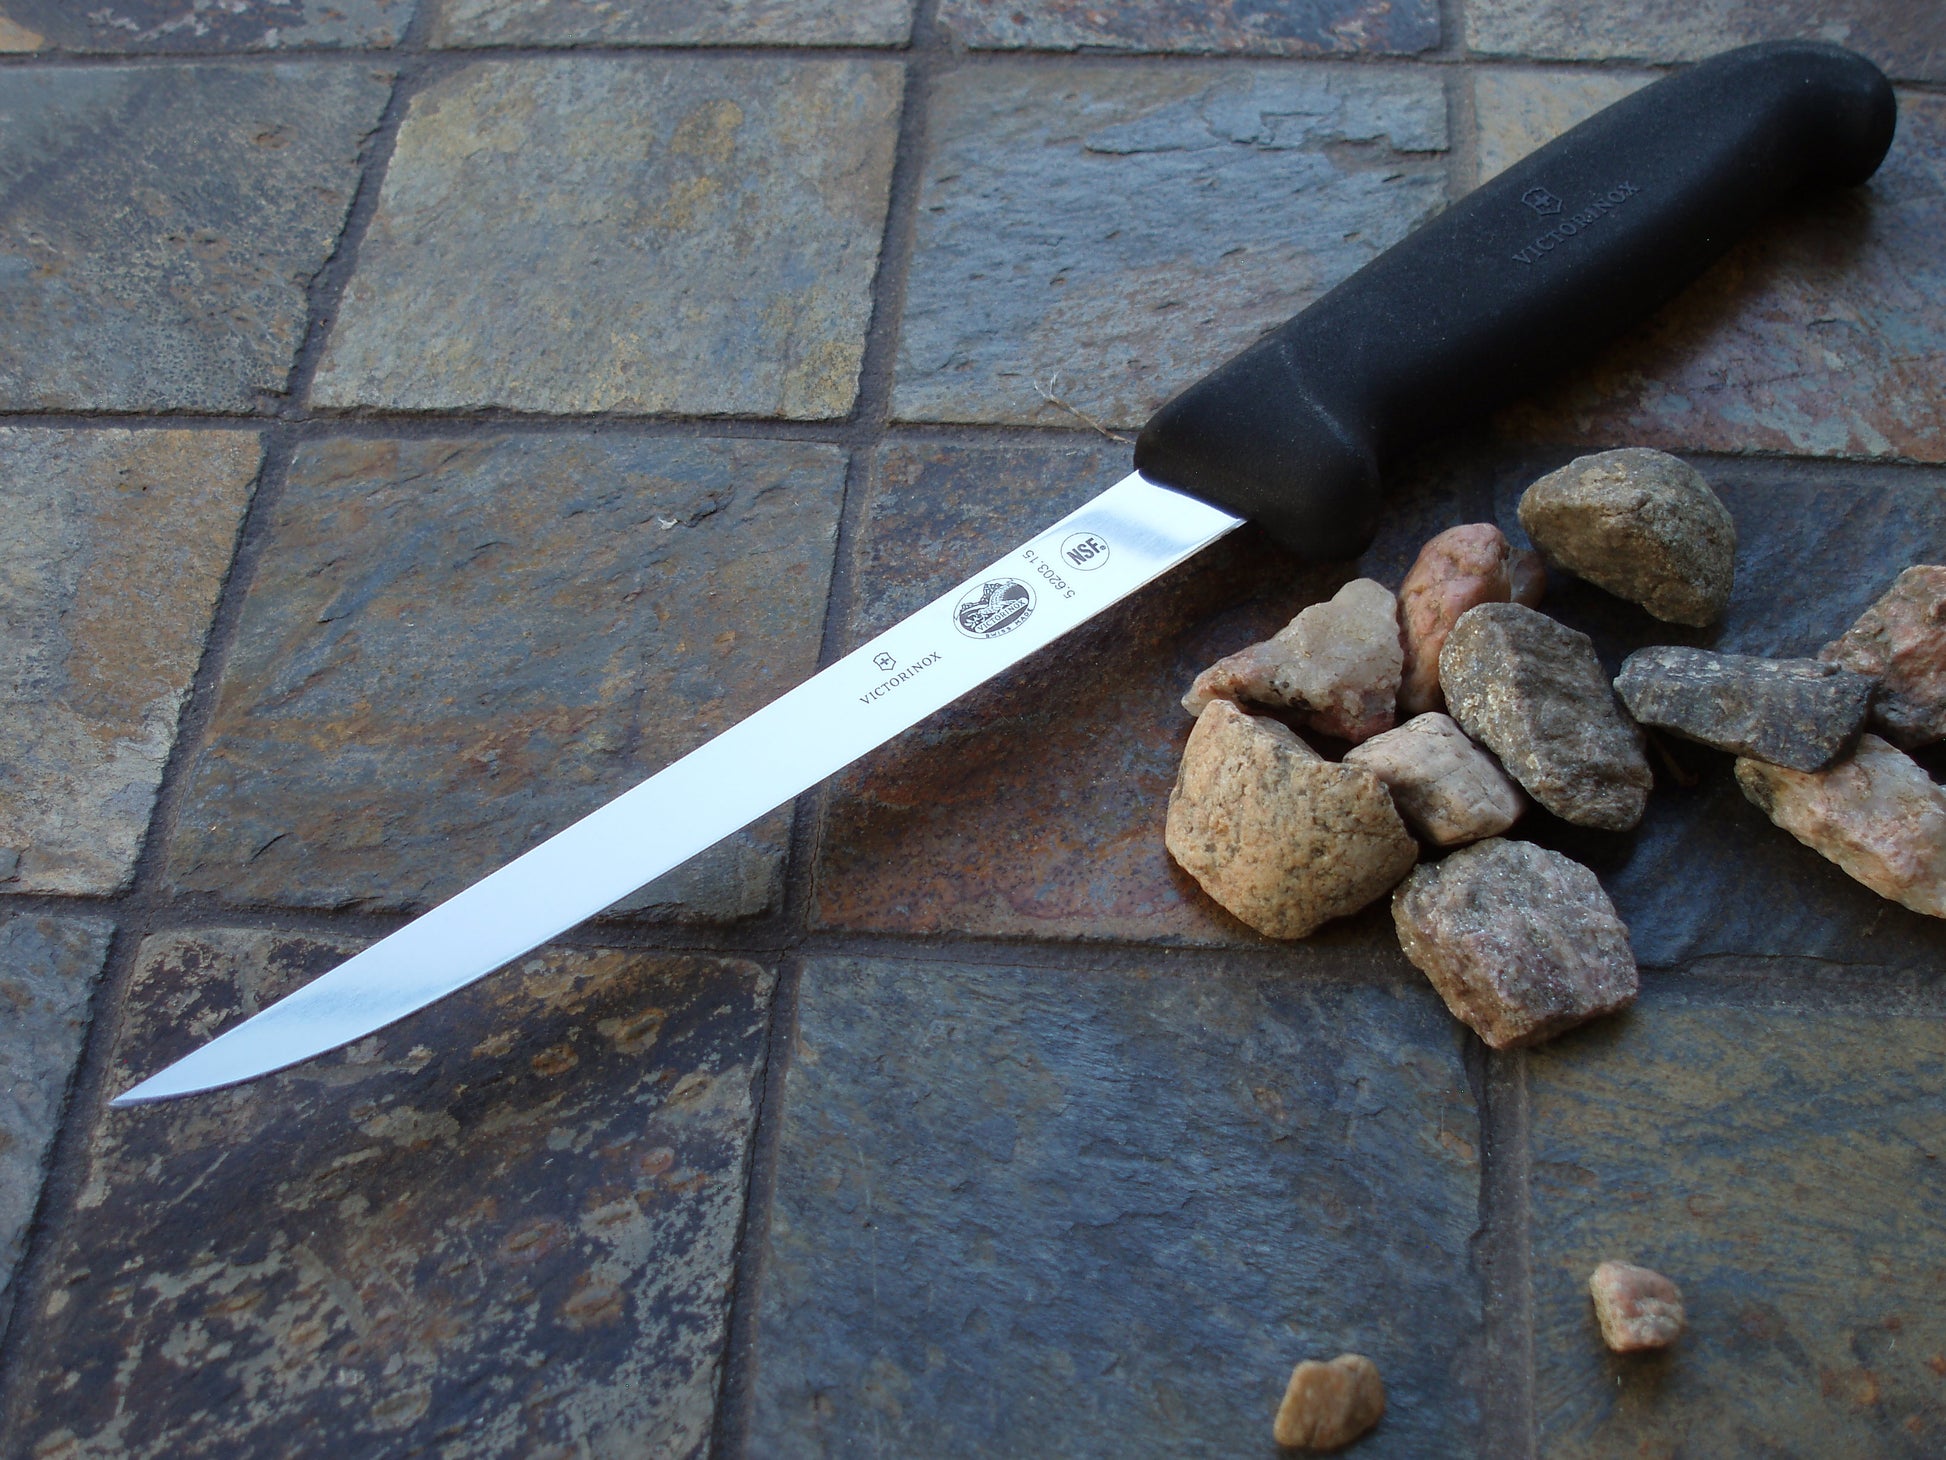 Victorinox BONING Knife 6 Narrow Semi-Flexible Blade